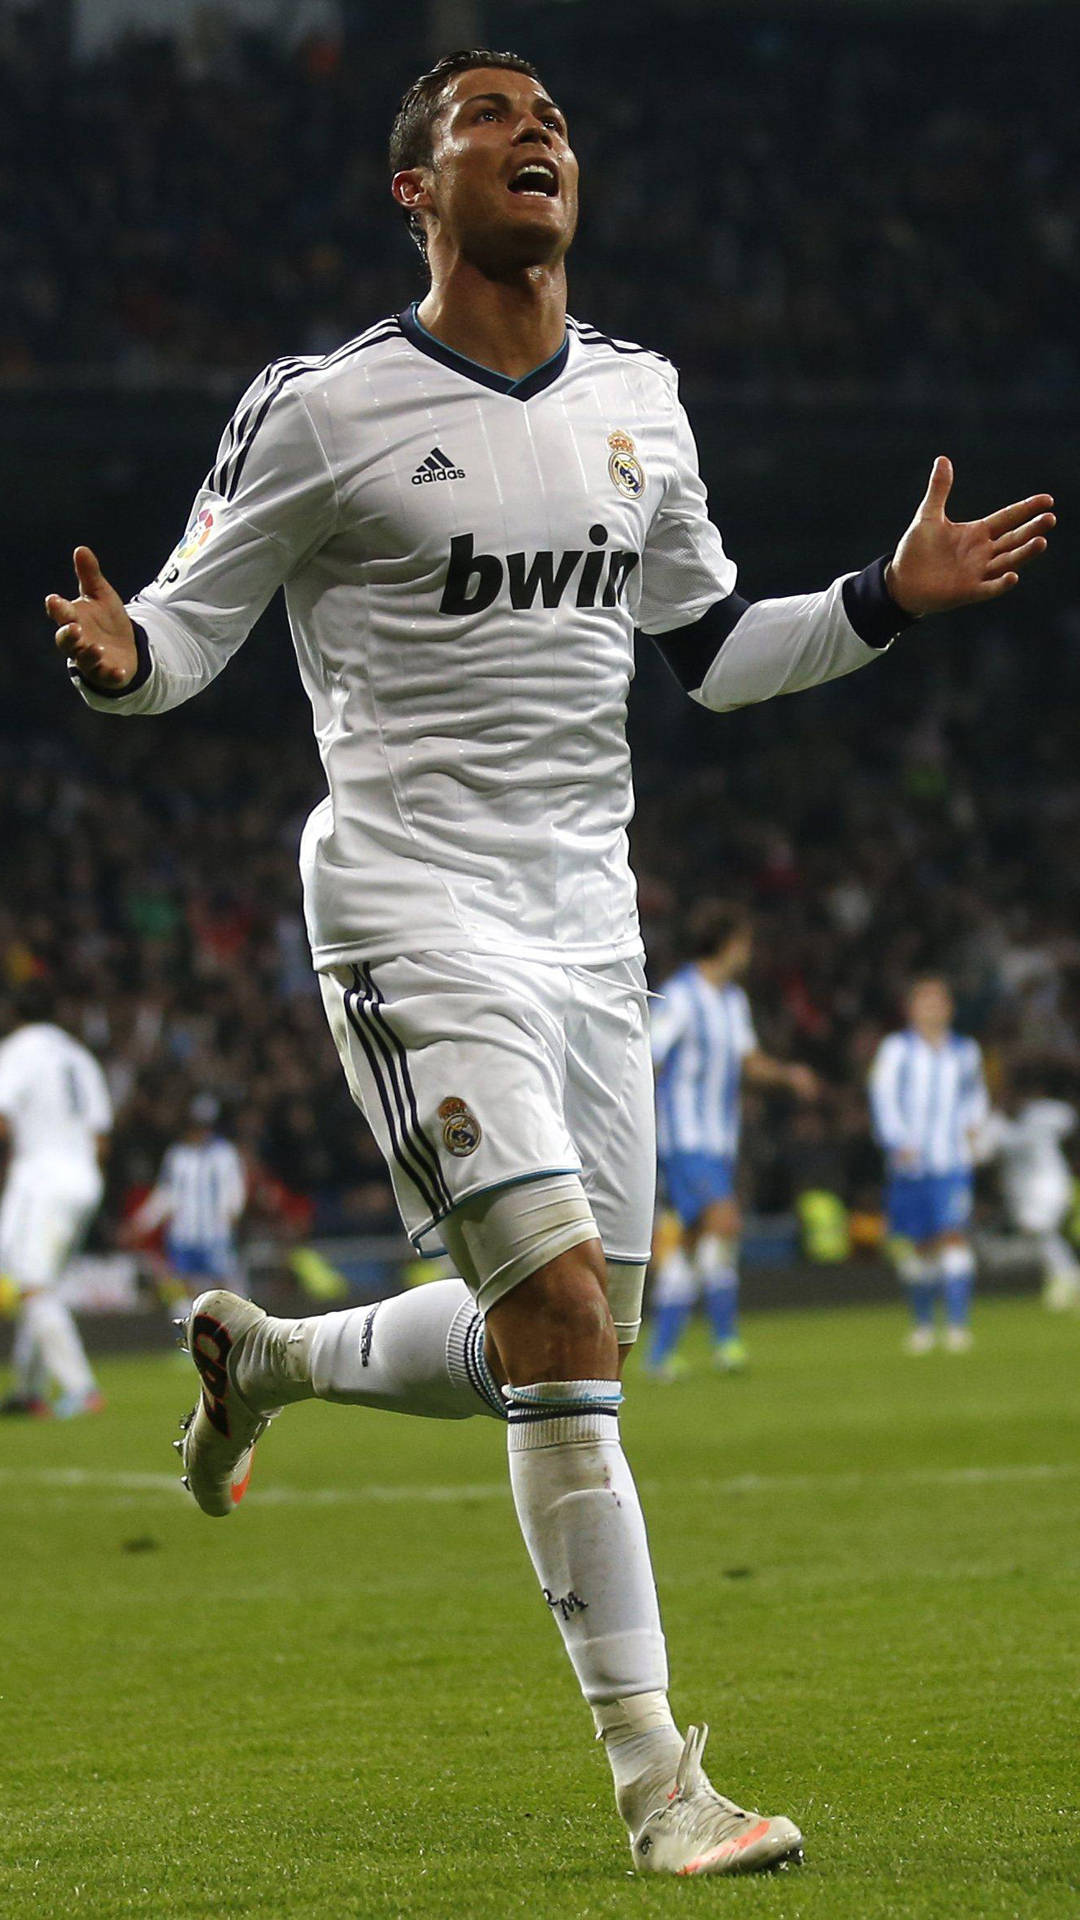 Bwin White Jersey Cristiano Ronaldo iPhone Wallpaper